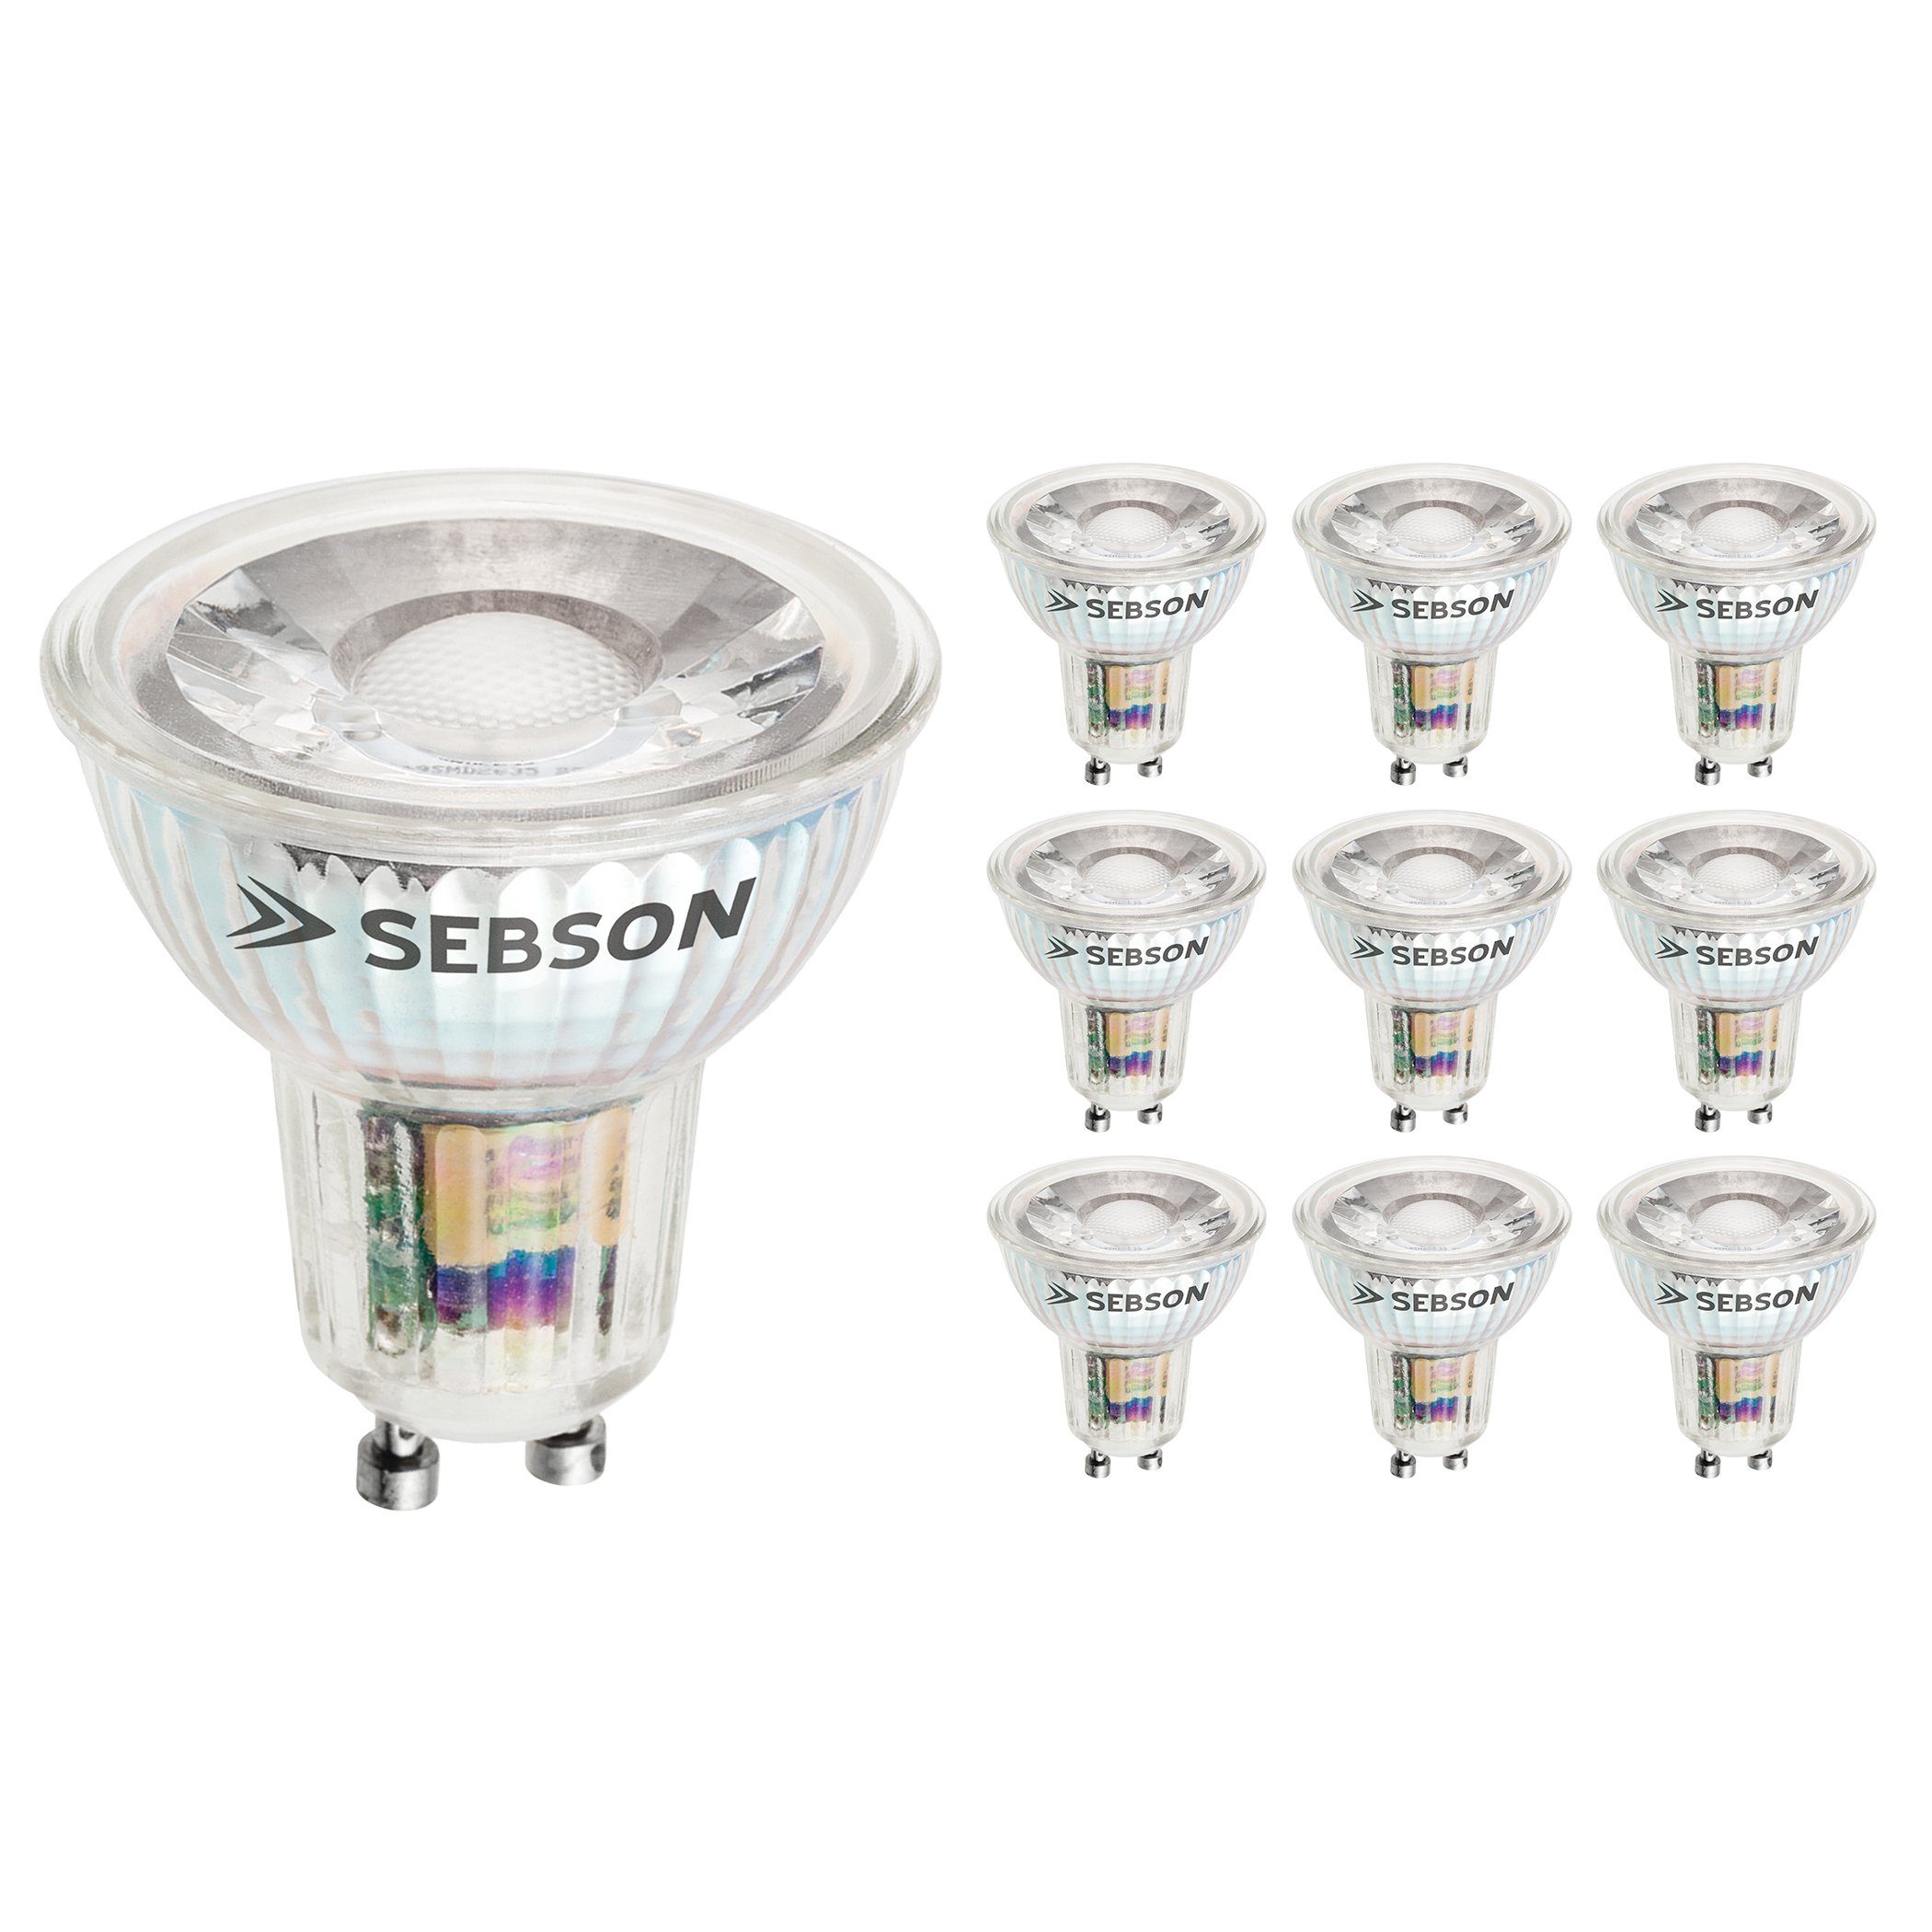 SEBSON LED-Leuchtmittel GU10 LED Lampe 5W warmweiß 380lm 3000K 230V Leuchtmittel - 10er Pack